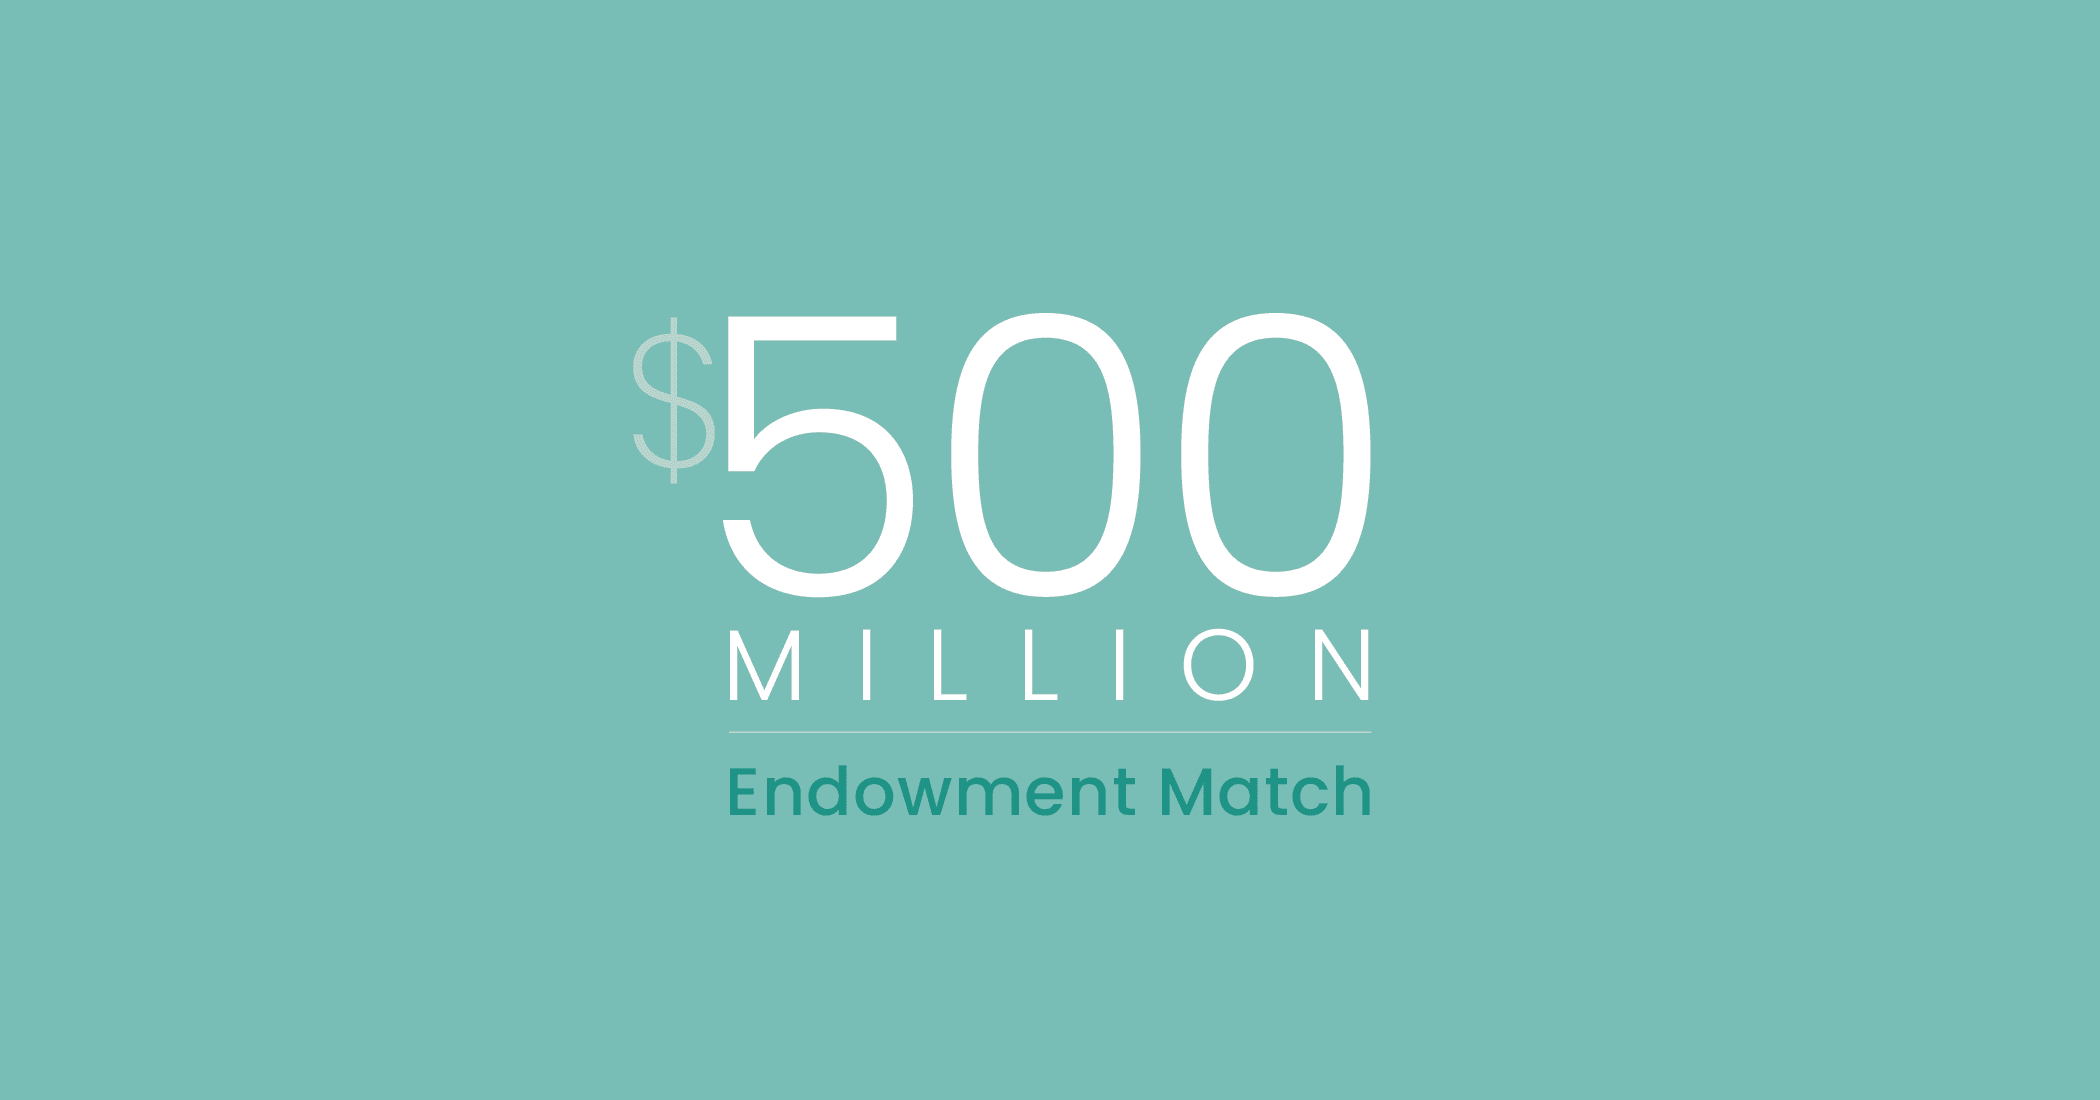 Endowment Match